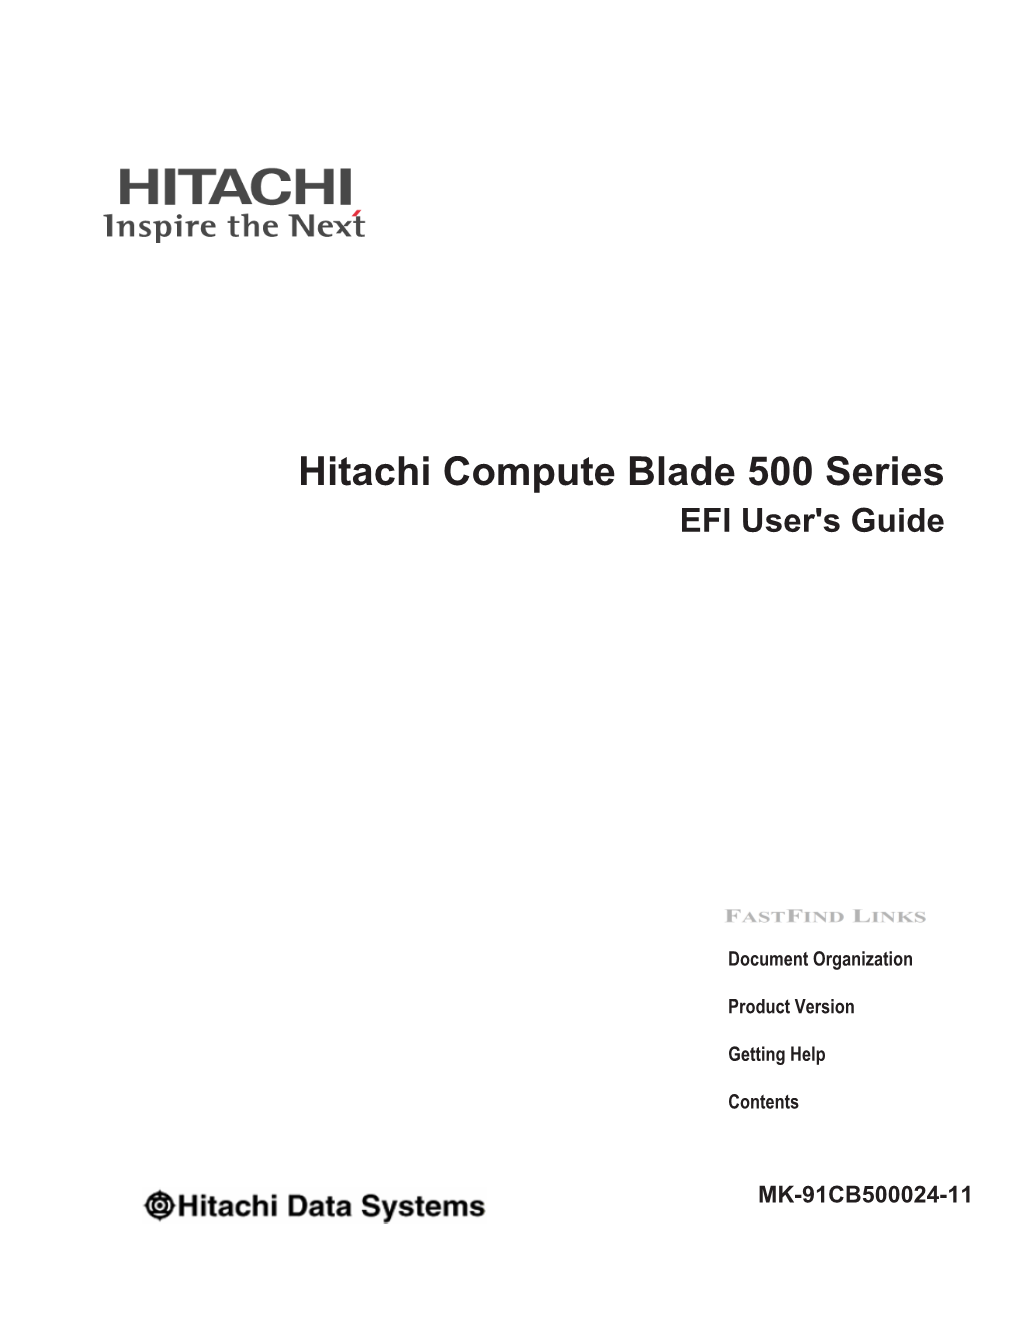 Hitachi Compute Blade 500 Series EFI User's Guide